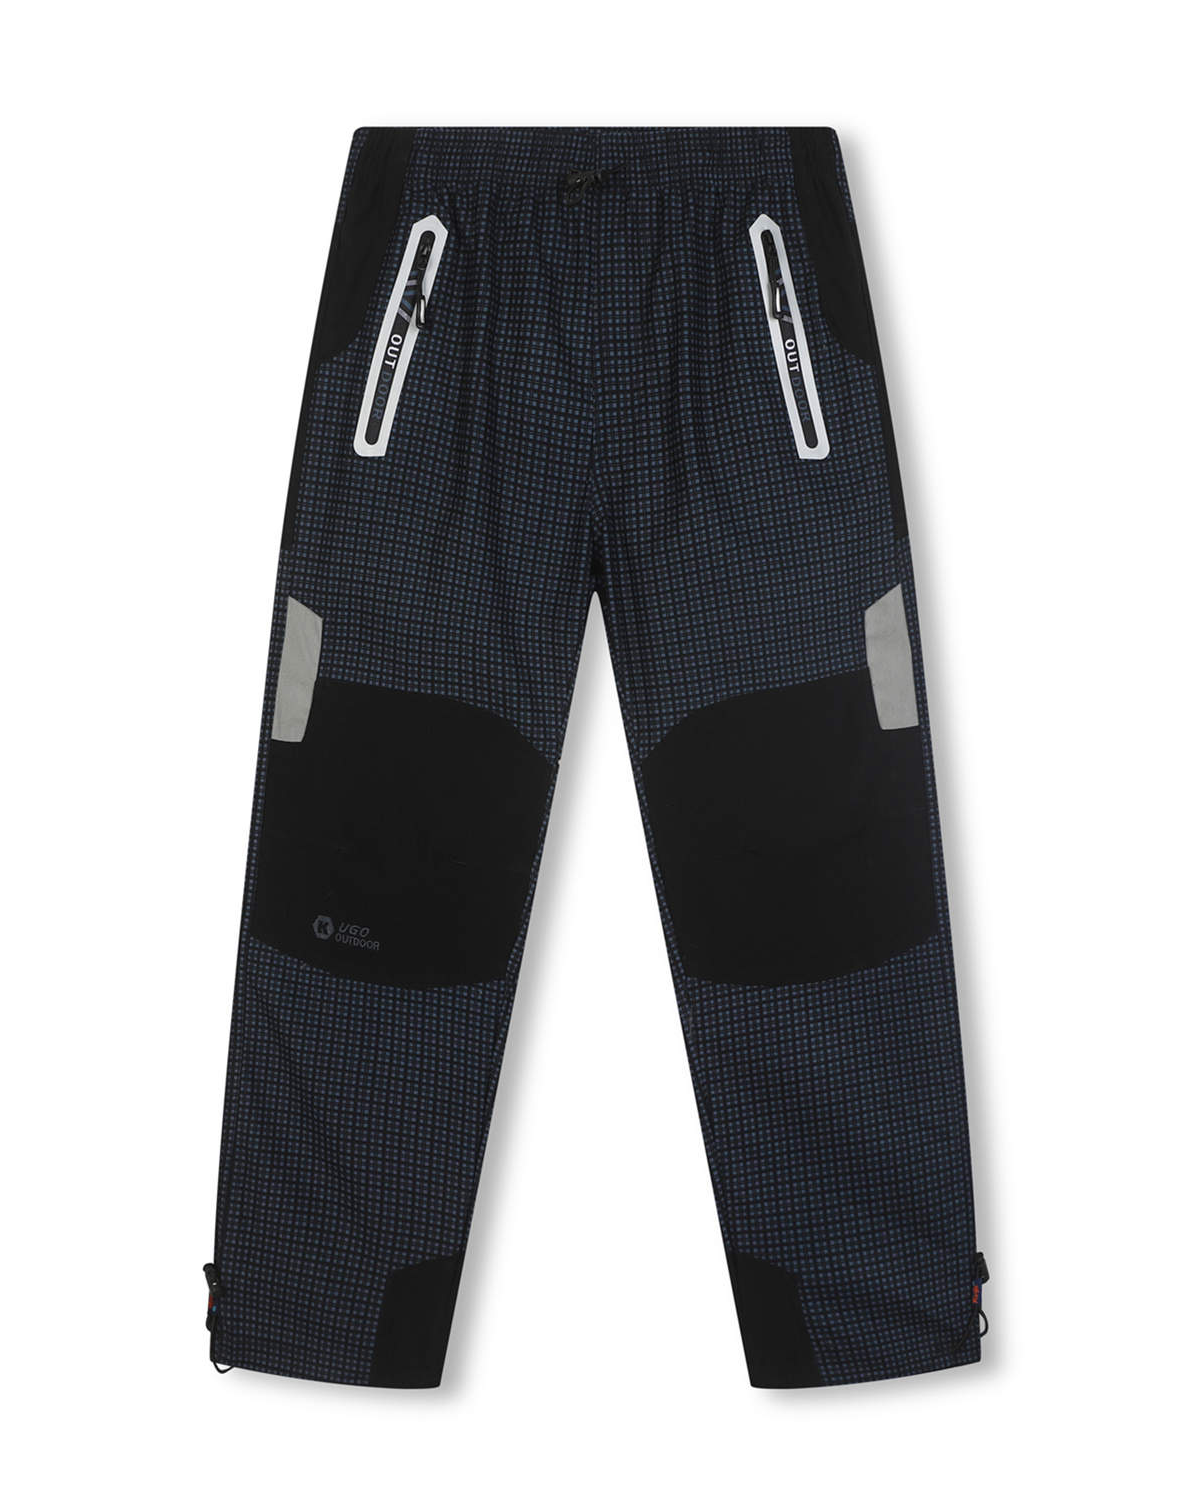 Chlapecké outdoorové kalhoty - KUGO G8556, šedomodrá / šedé kapsy Barva: Šedá, Velikost: 164